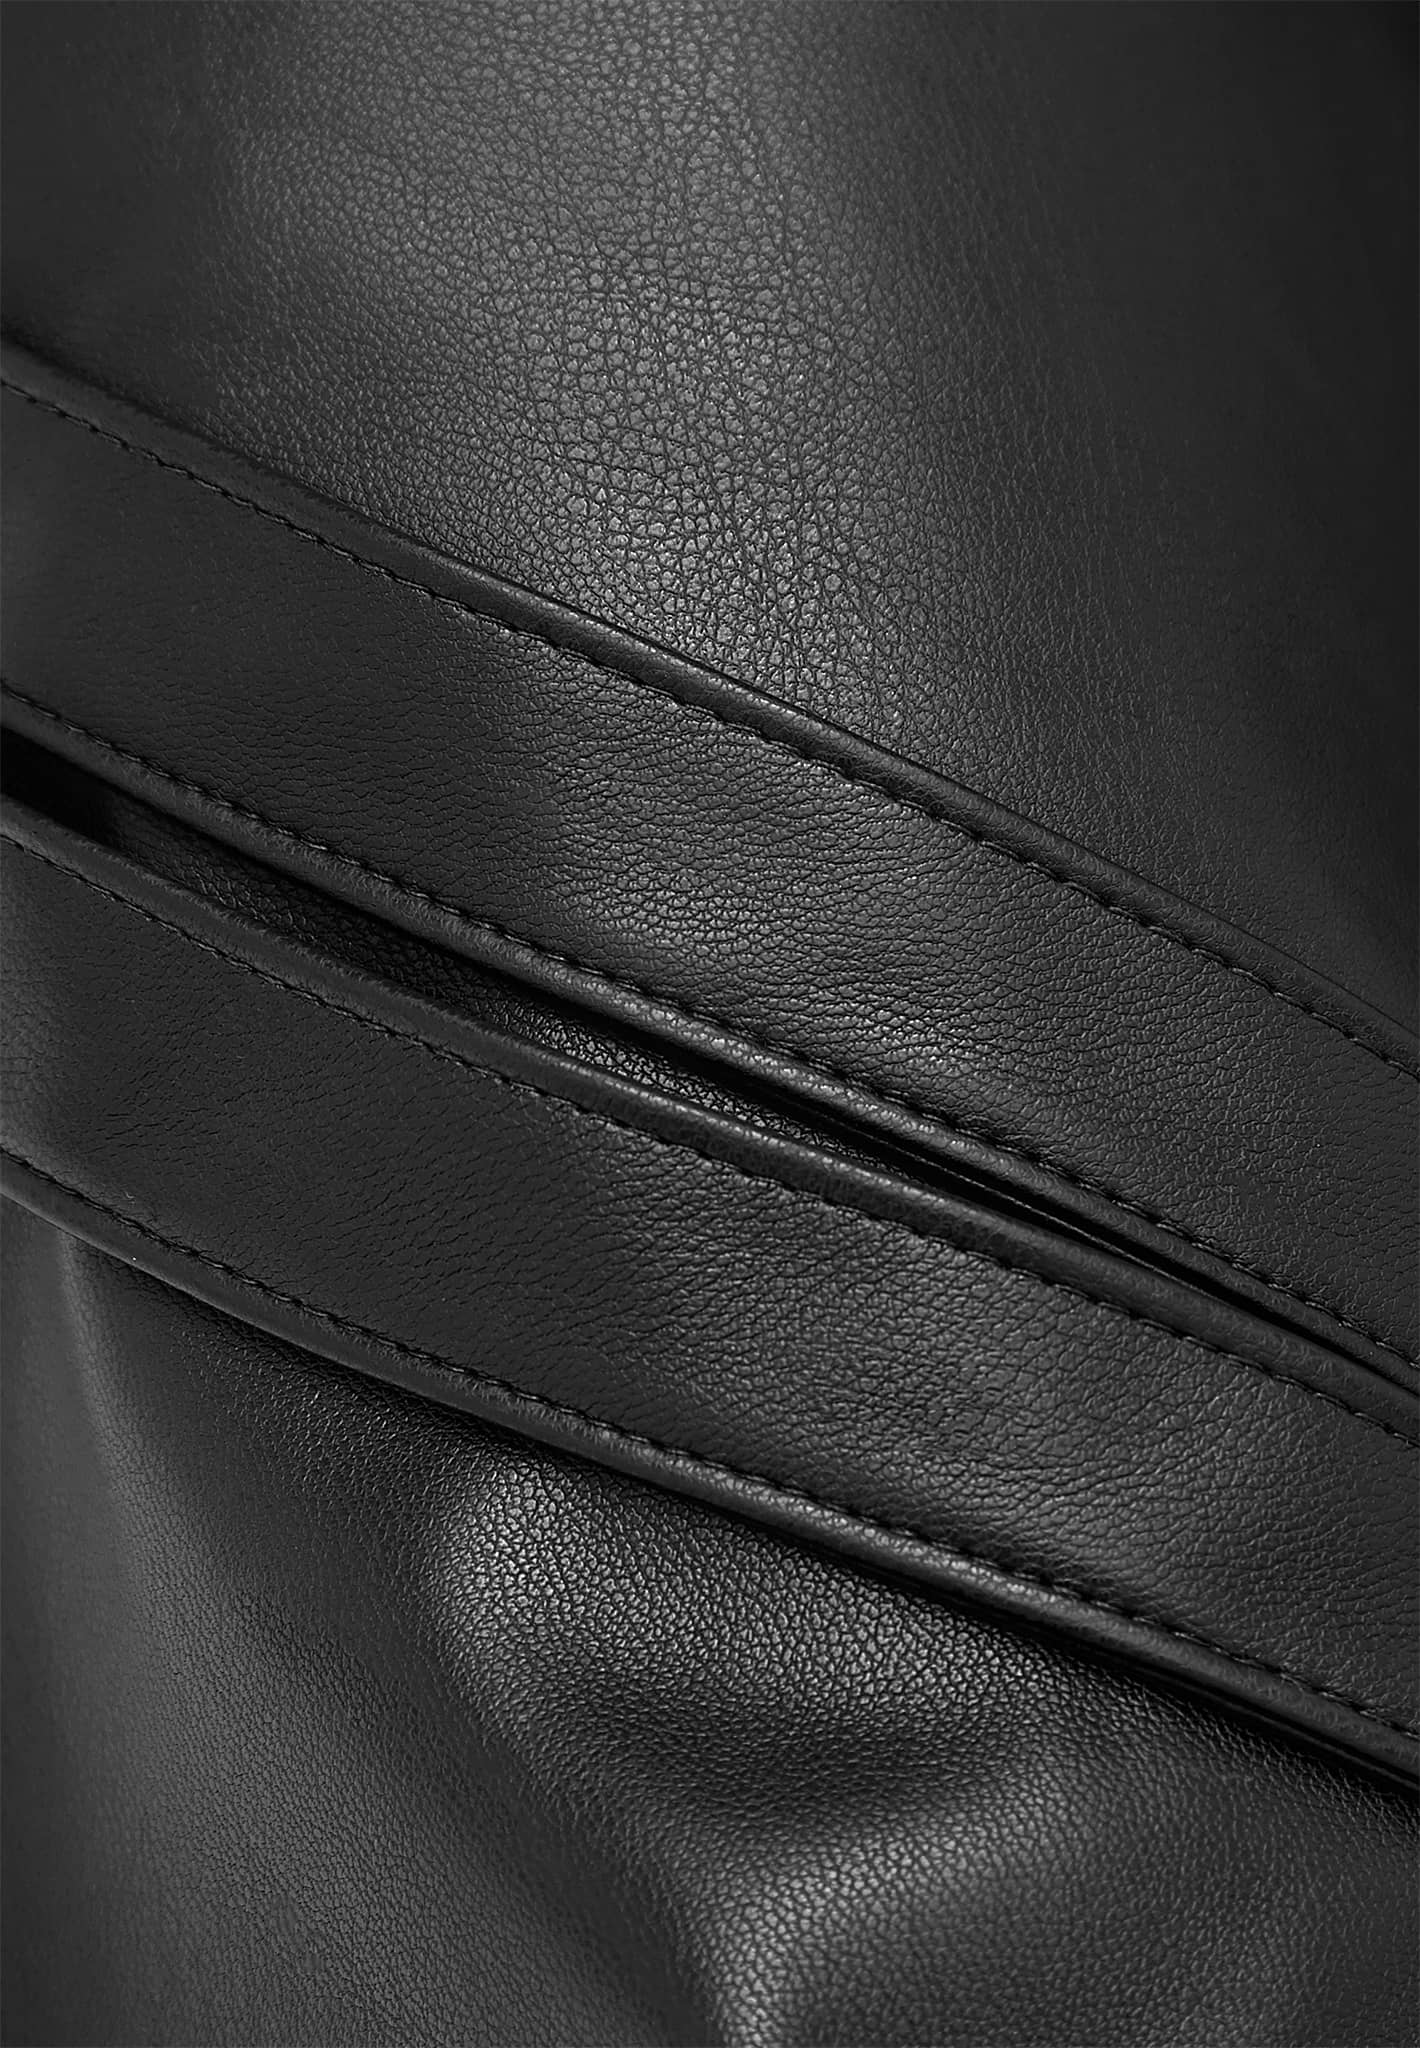 Vegan Leather & Woven Trousers - Black